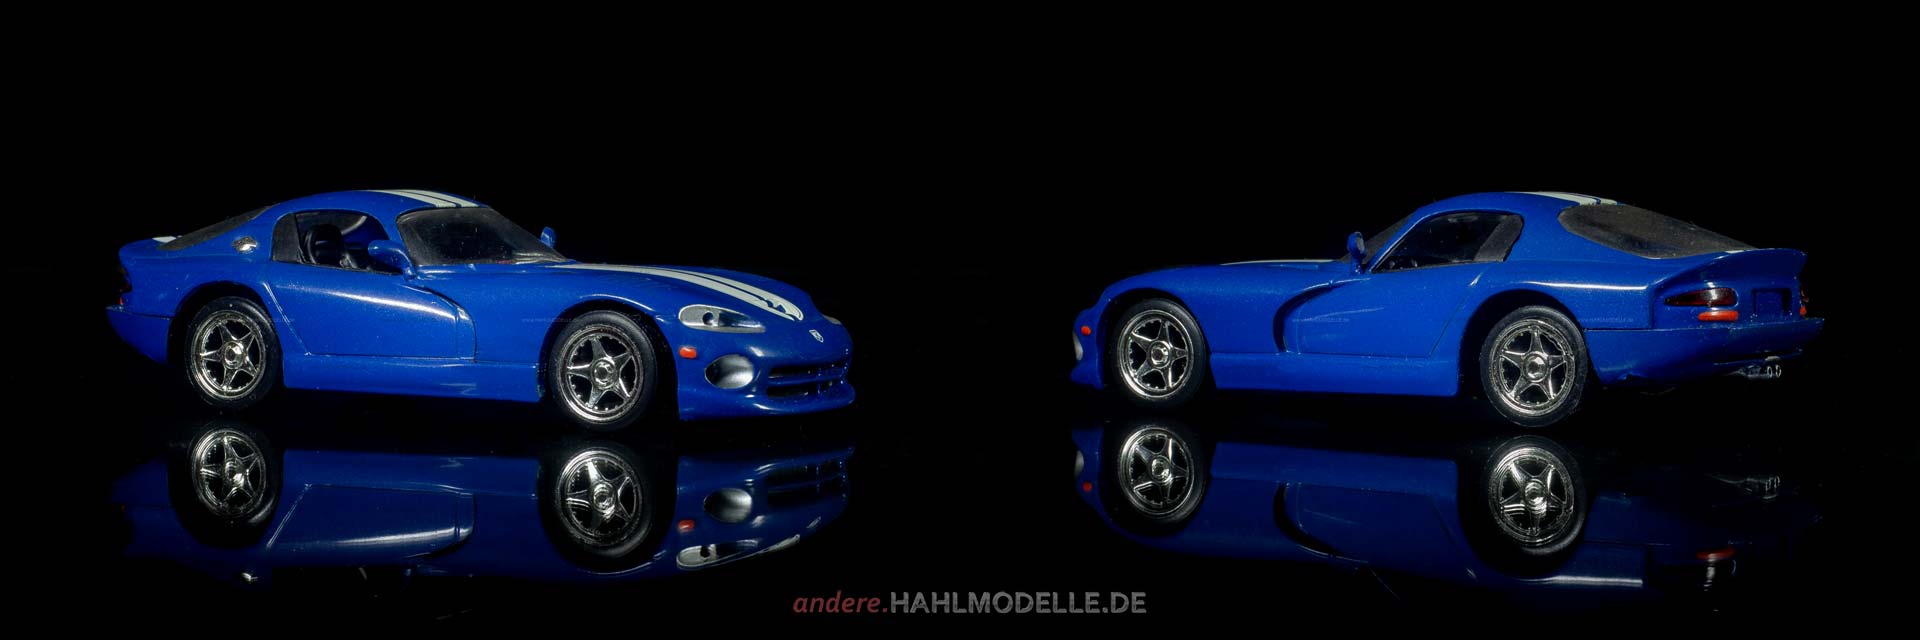 Dodge Viper GTS | Coupé | Ixo (Del Prado Car Collection) | 1:43 | www.andere.hahlmodelle.de